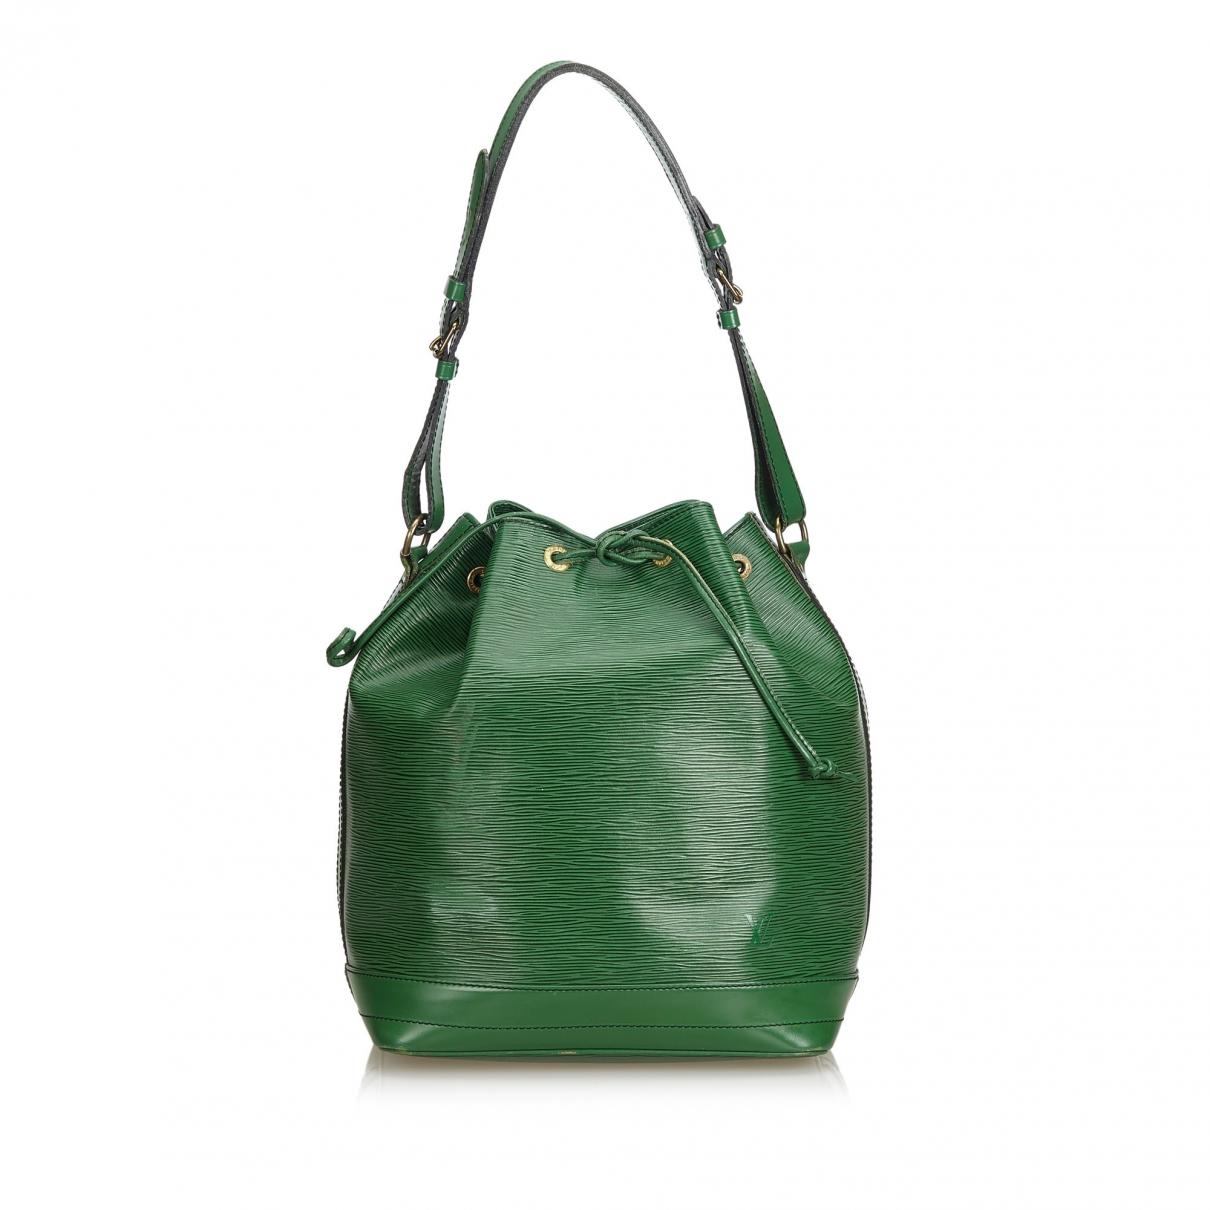 Louis Vuitton Noé Green Leather Handbag in Green - Lyst